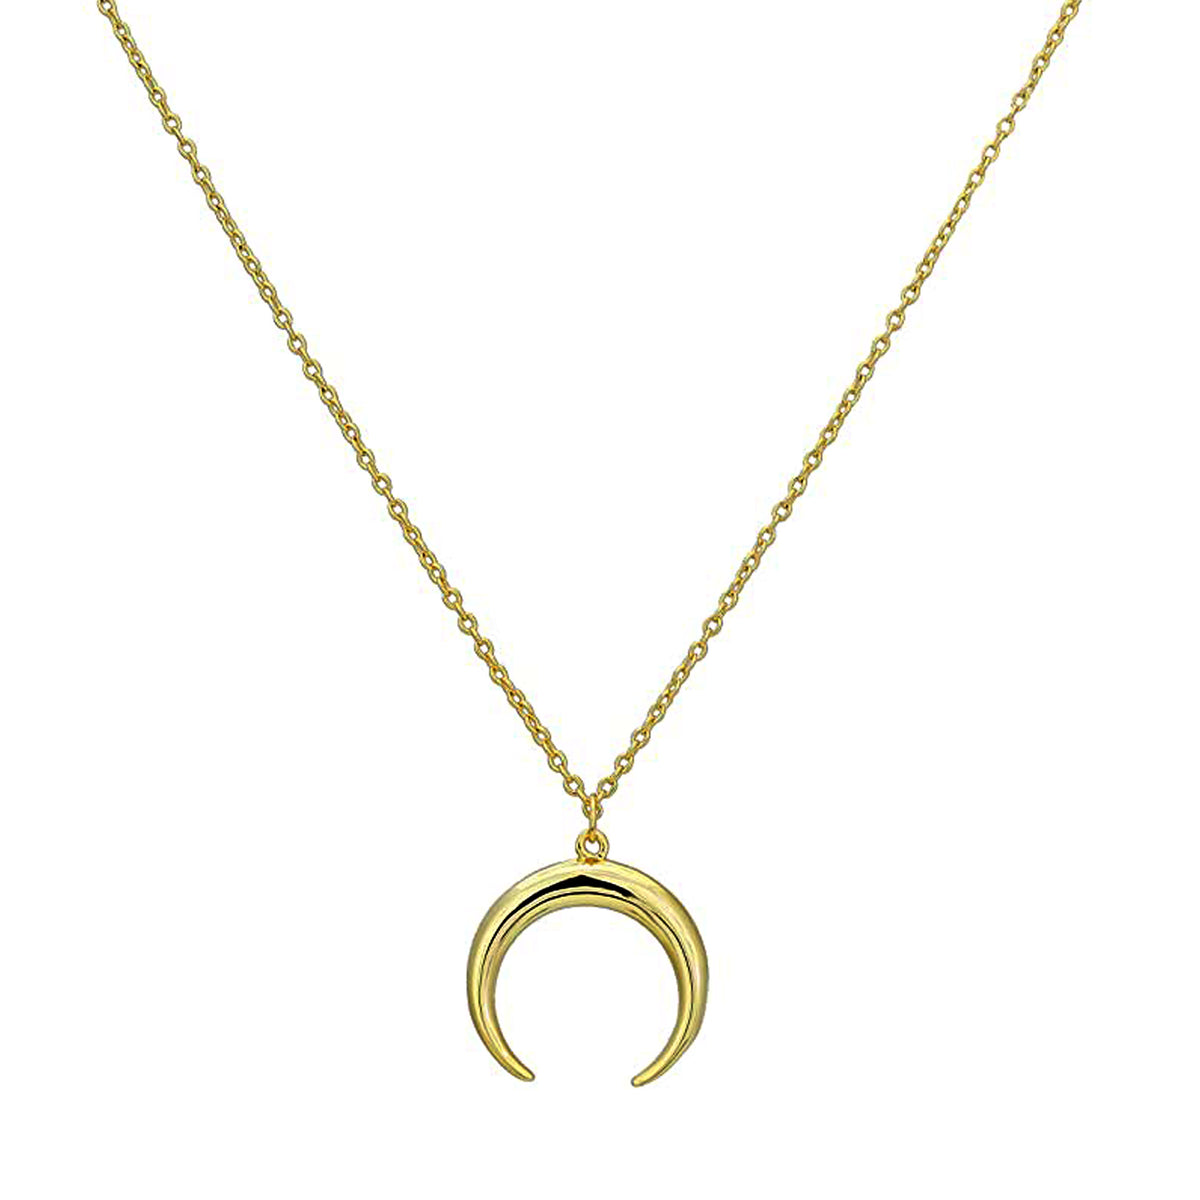 14K Gold Crescent Moon Pendant Necklace, 18"